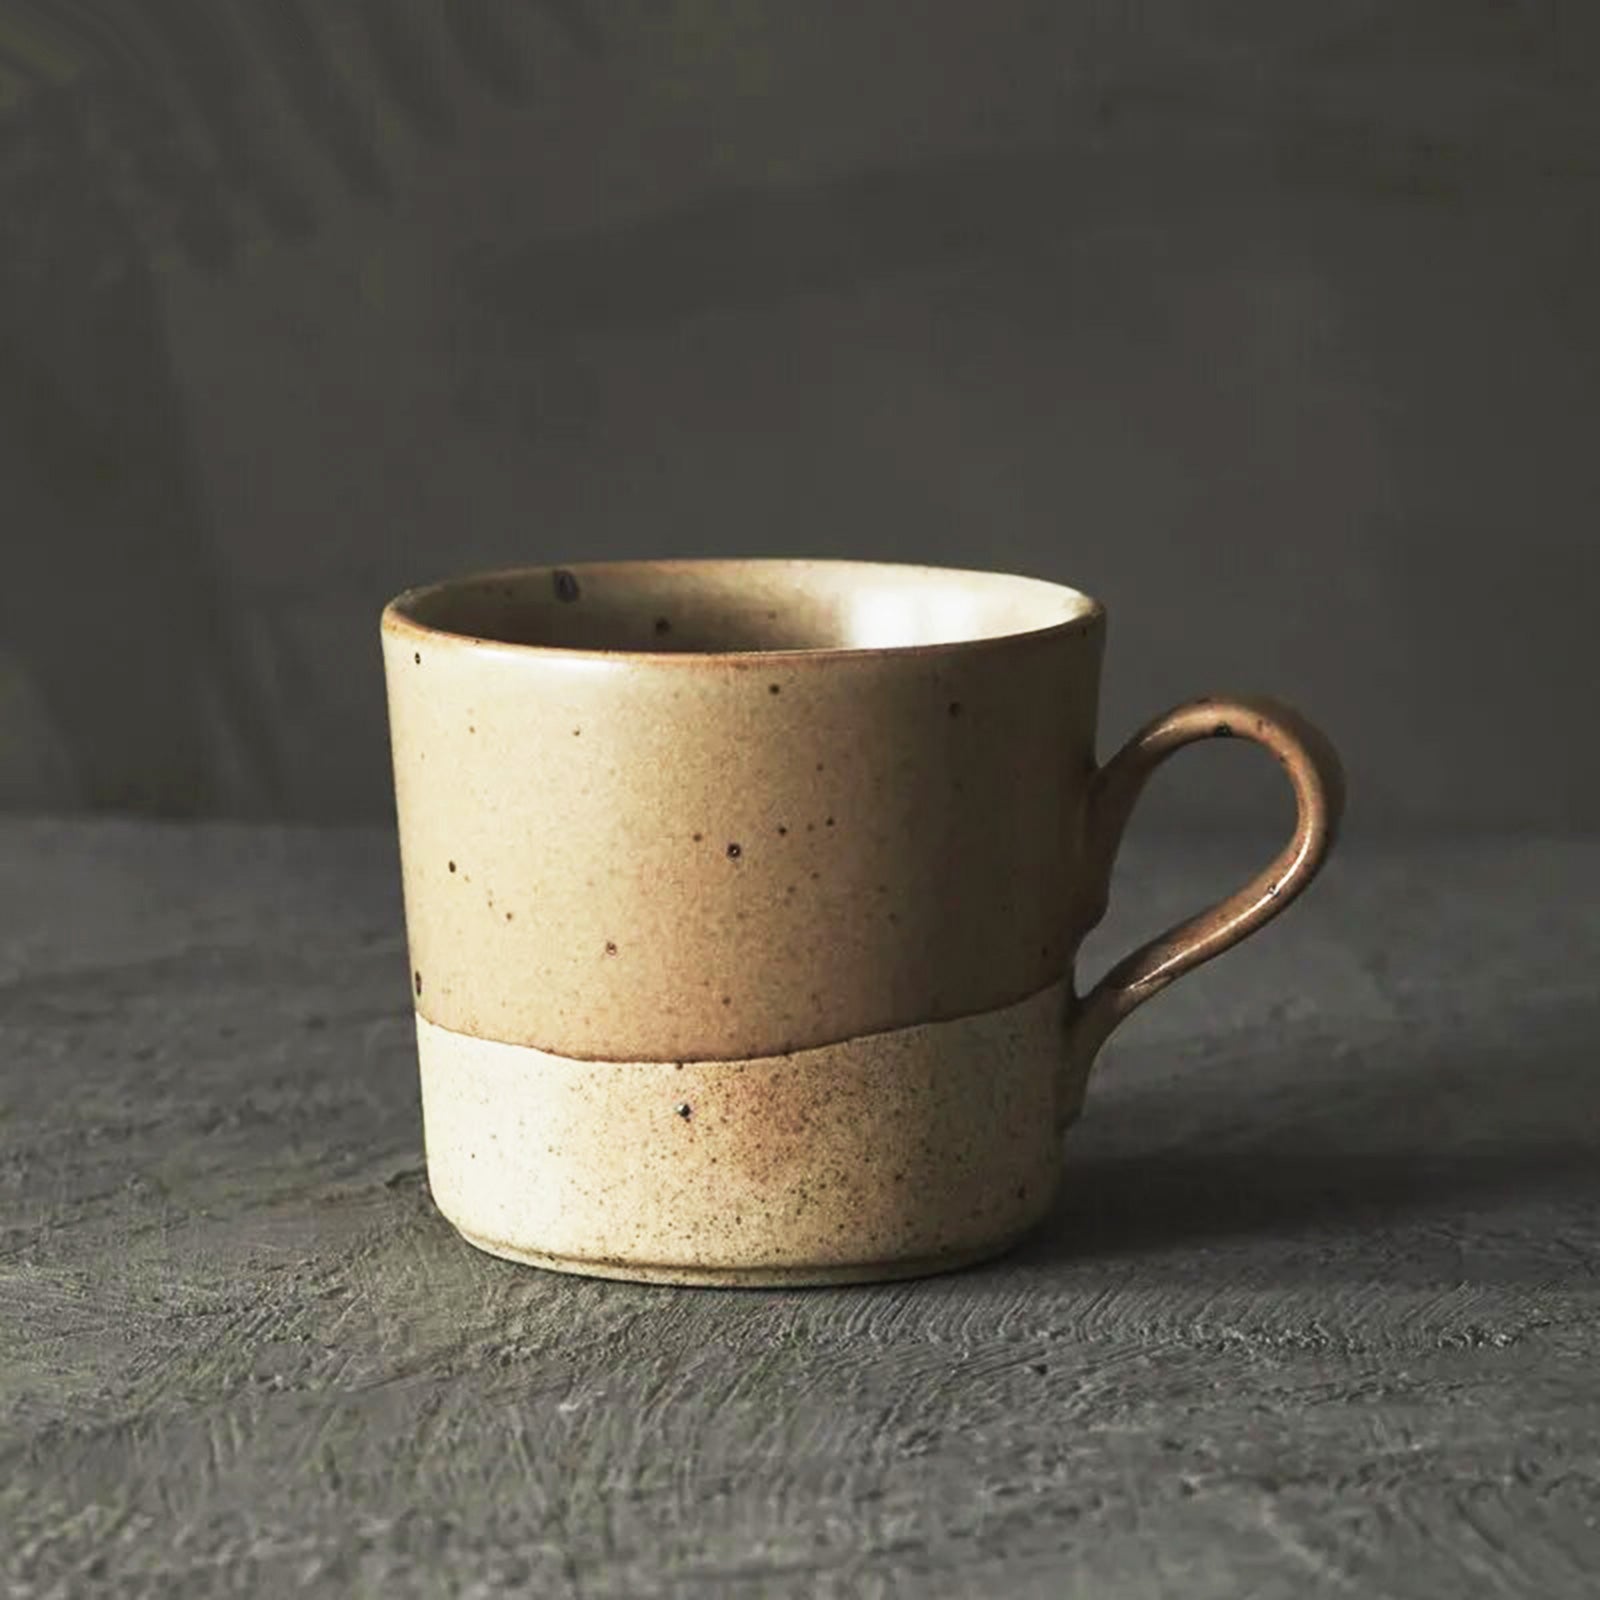 Rare Coffee Cups with Beautiful Semi-Covered Glaze